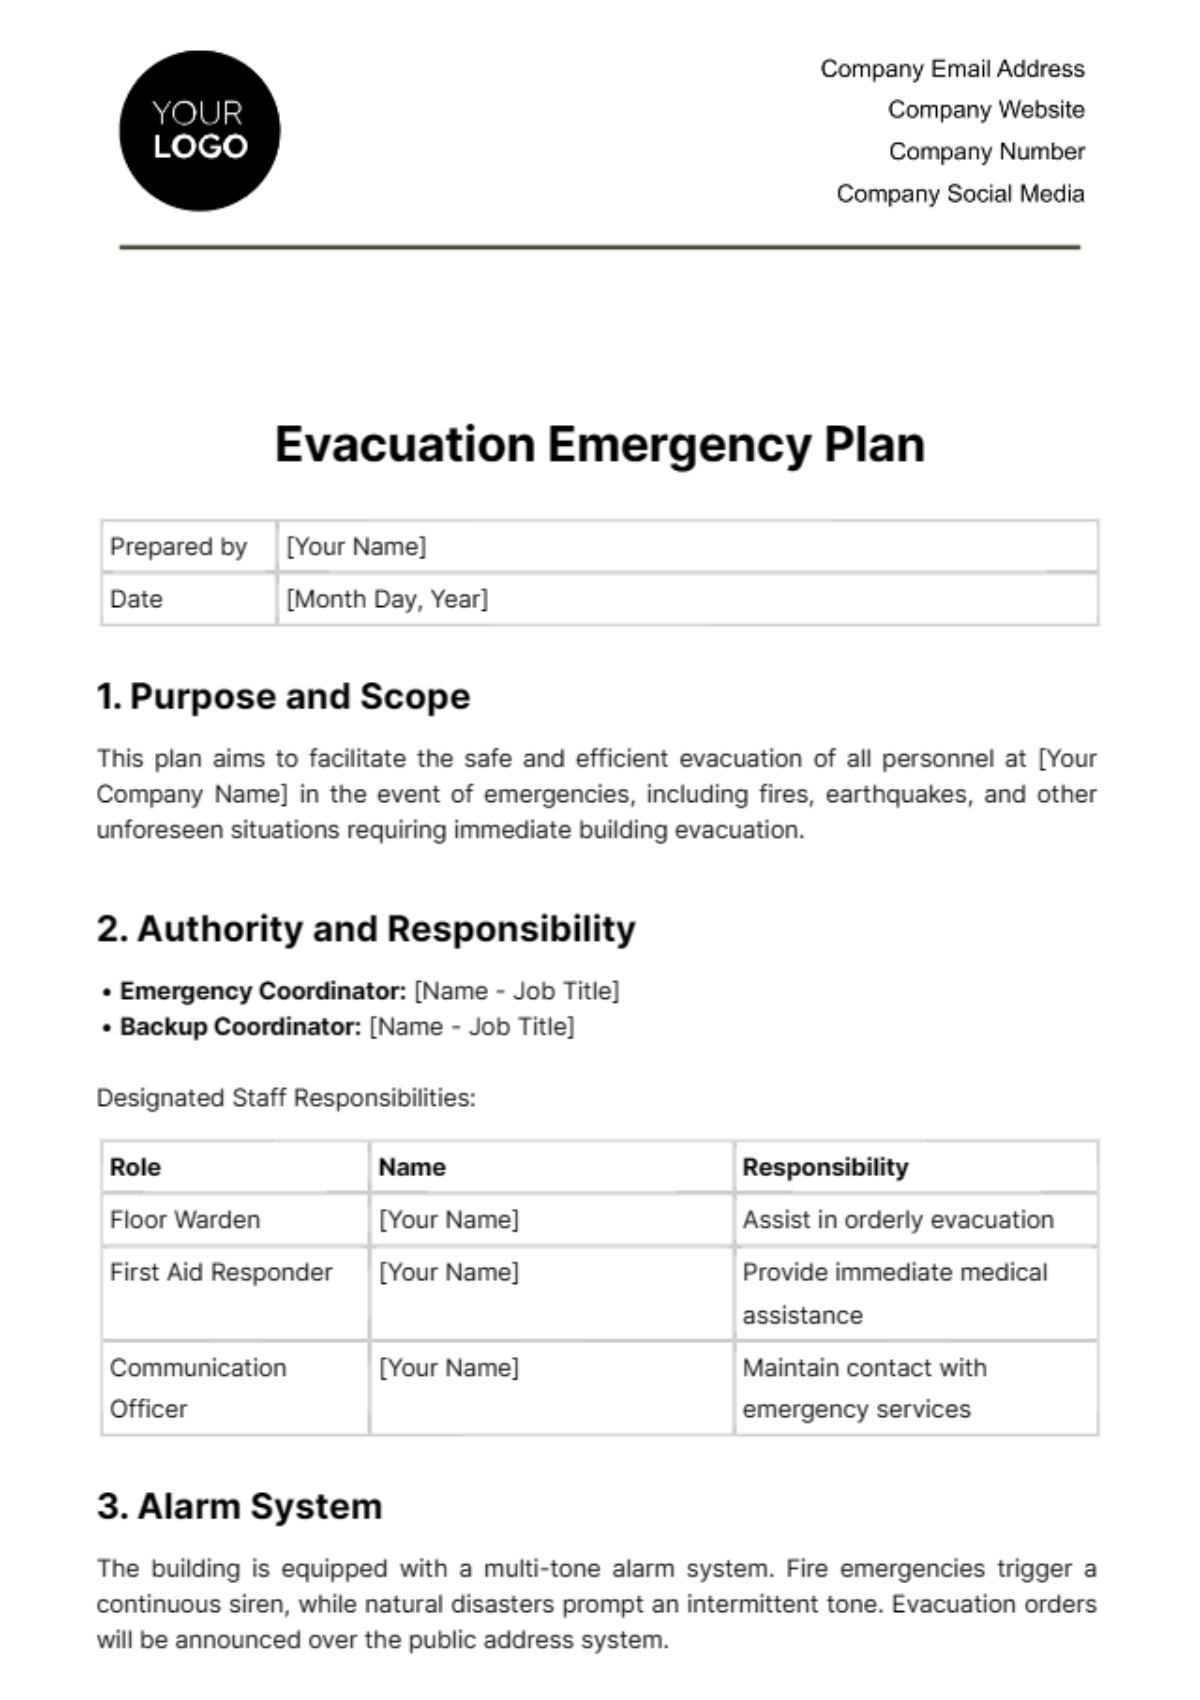 Evacuation Emergency Plan Template